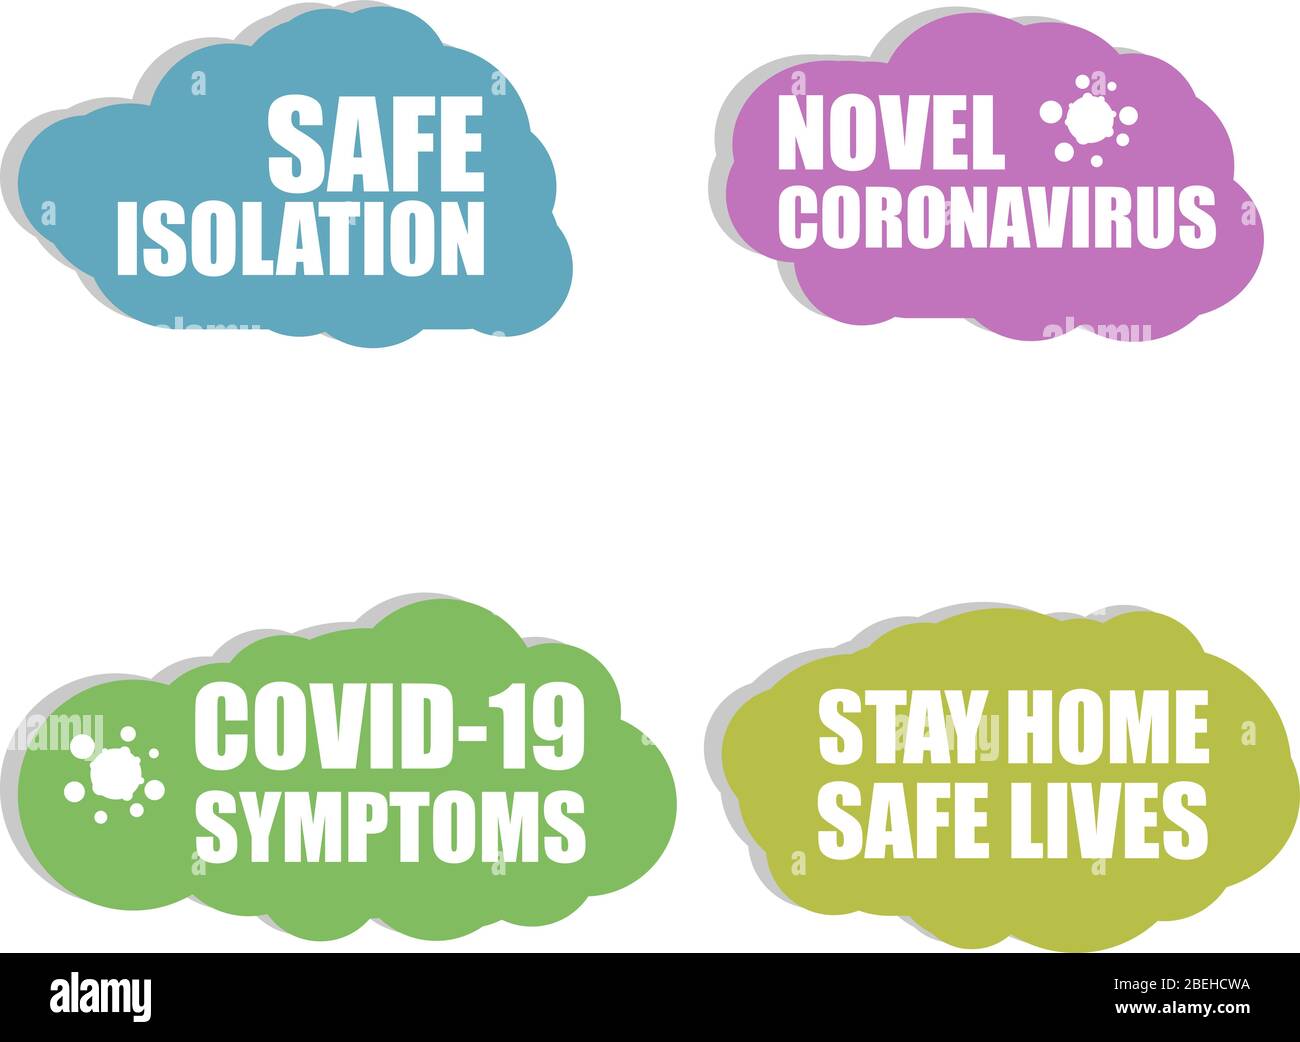 Contra el icono de Coronavirus. Aislamiento seguro. Icono COVID-19. Coronavirus novedoso. Síntomas de COVID 19. Coronavirus. Señal aislada sobre fondo blanco Foto de stock